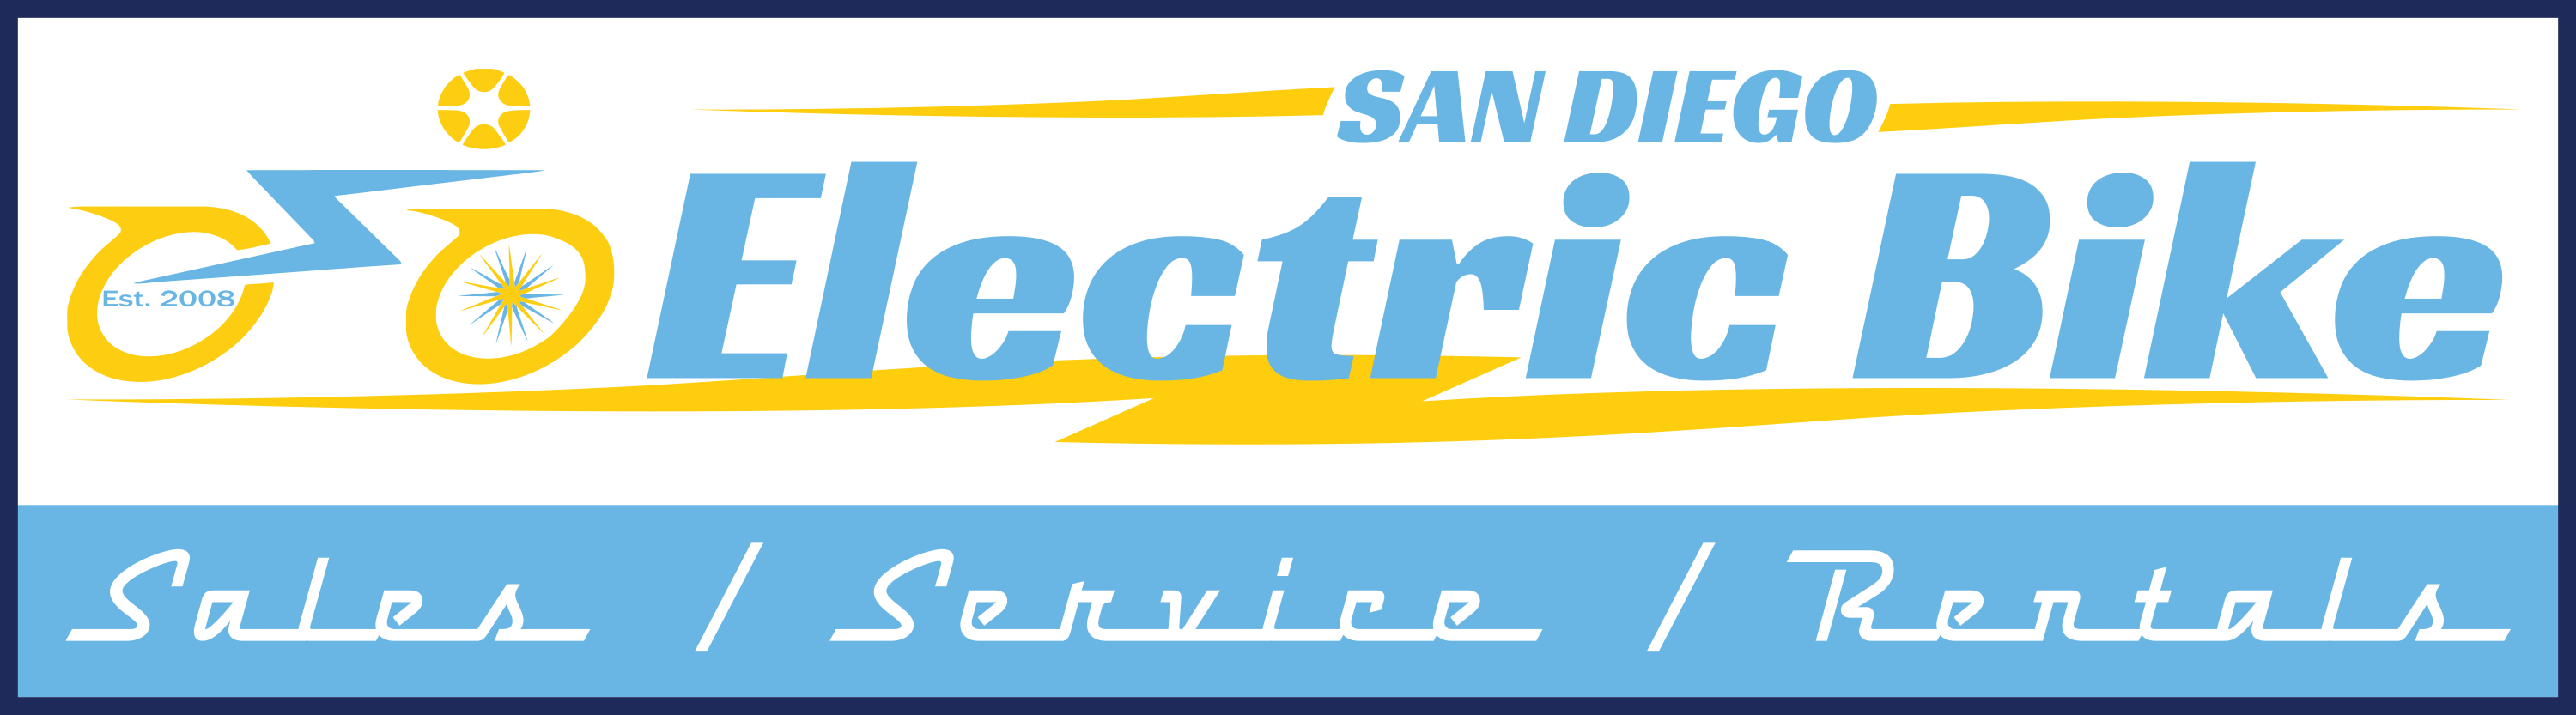 SD Ebike logo